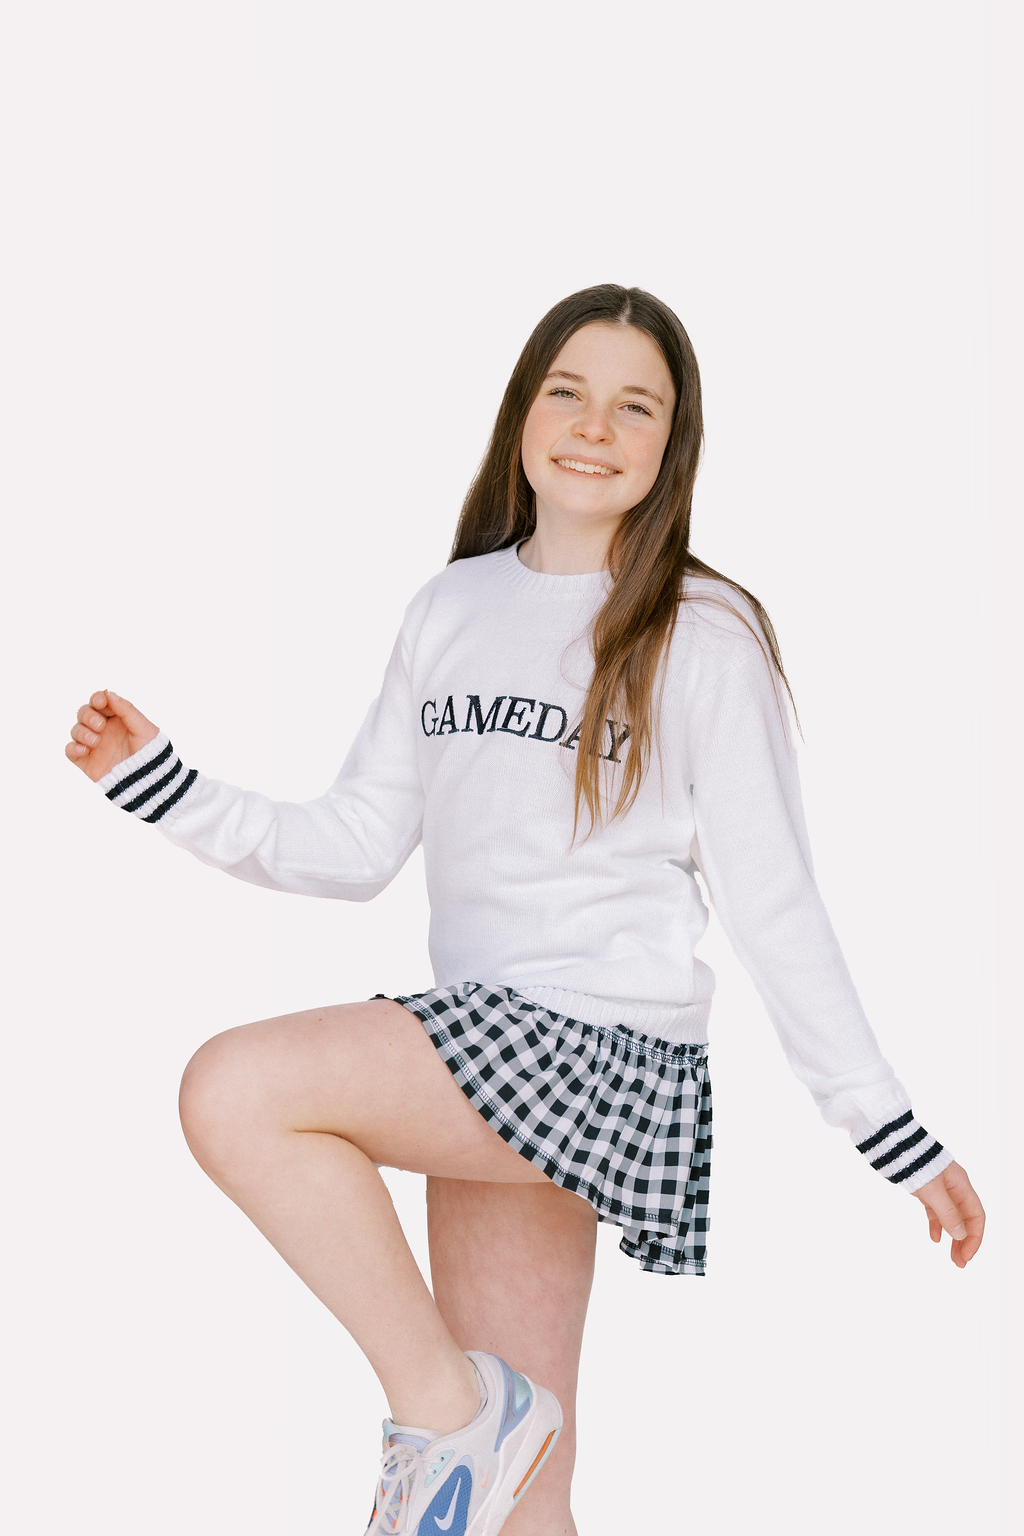 Girls Lawley Skirt Print - Capri